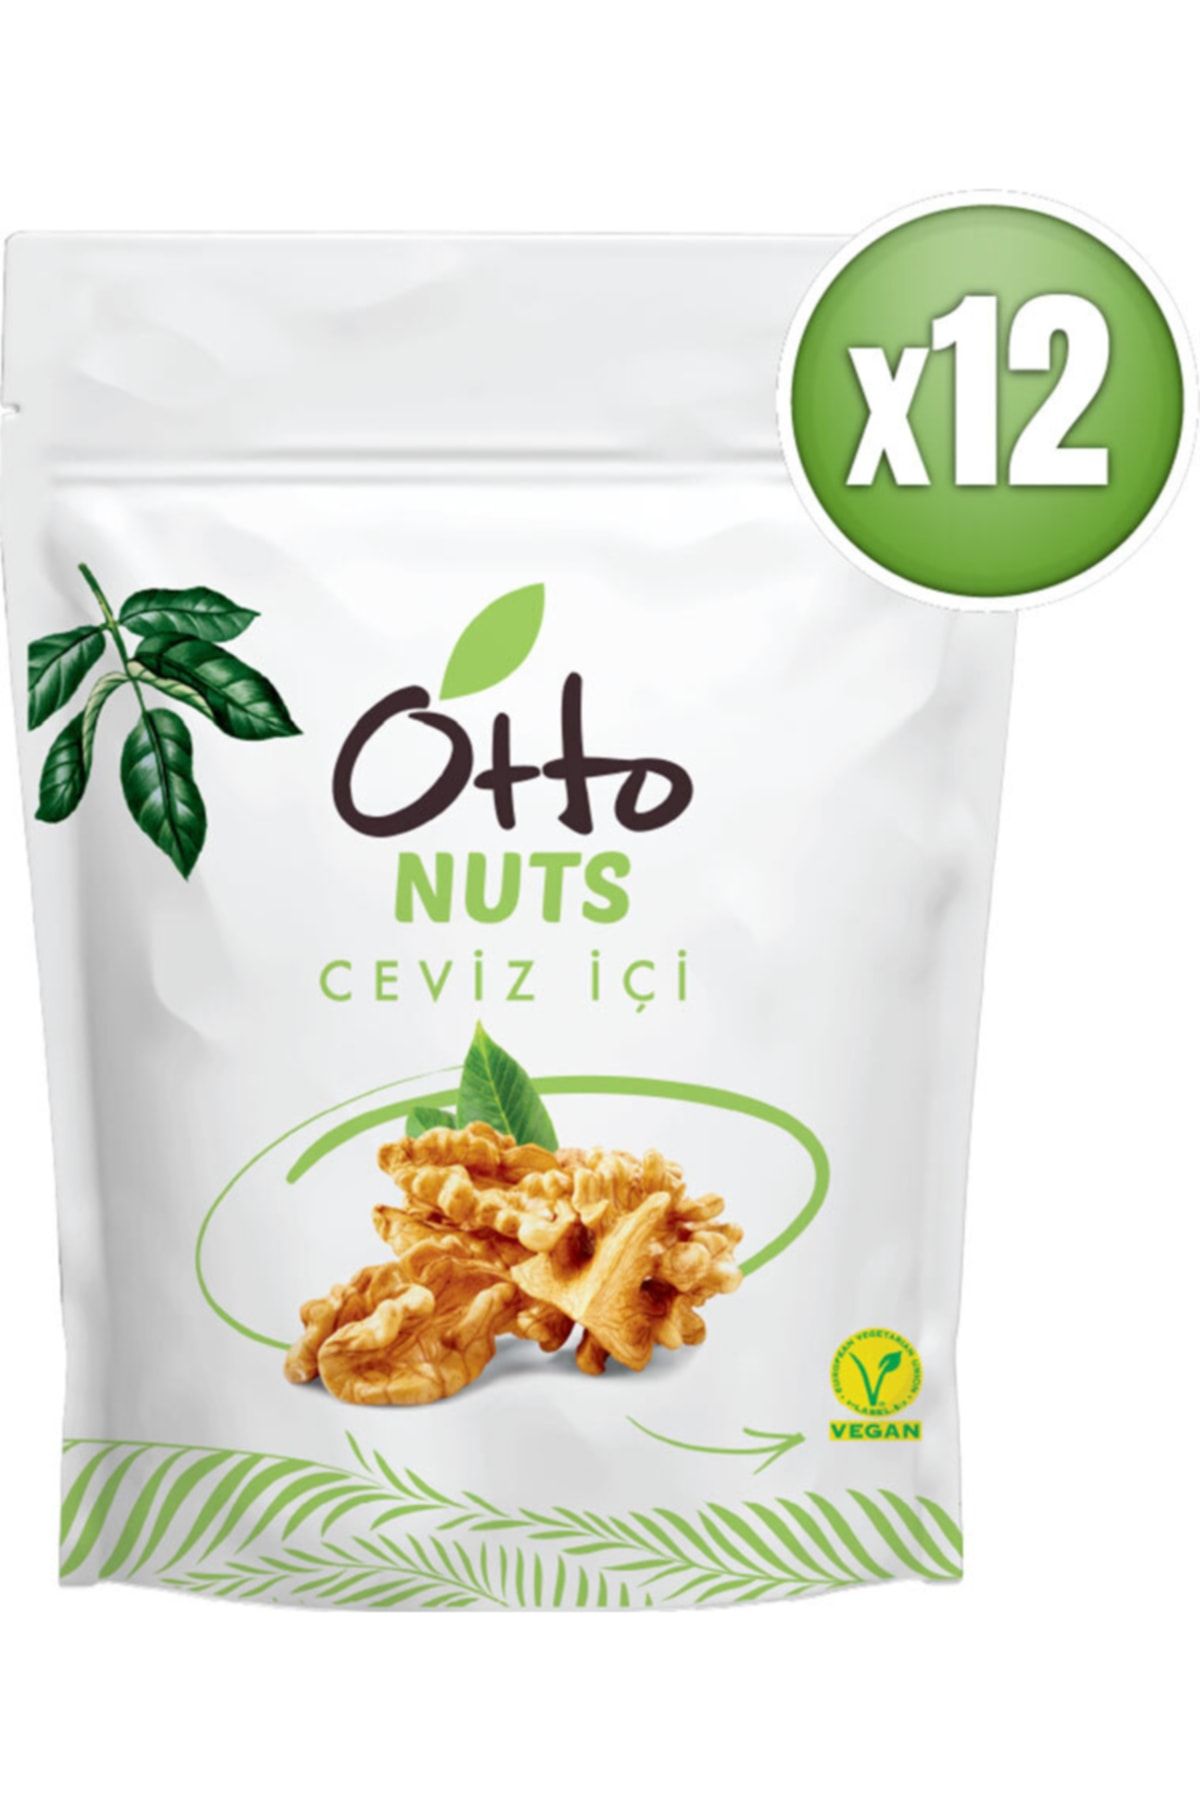 Otto Nuts Vegan Ceviz Içi 12 X 100 G